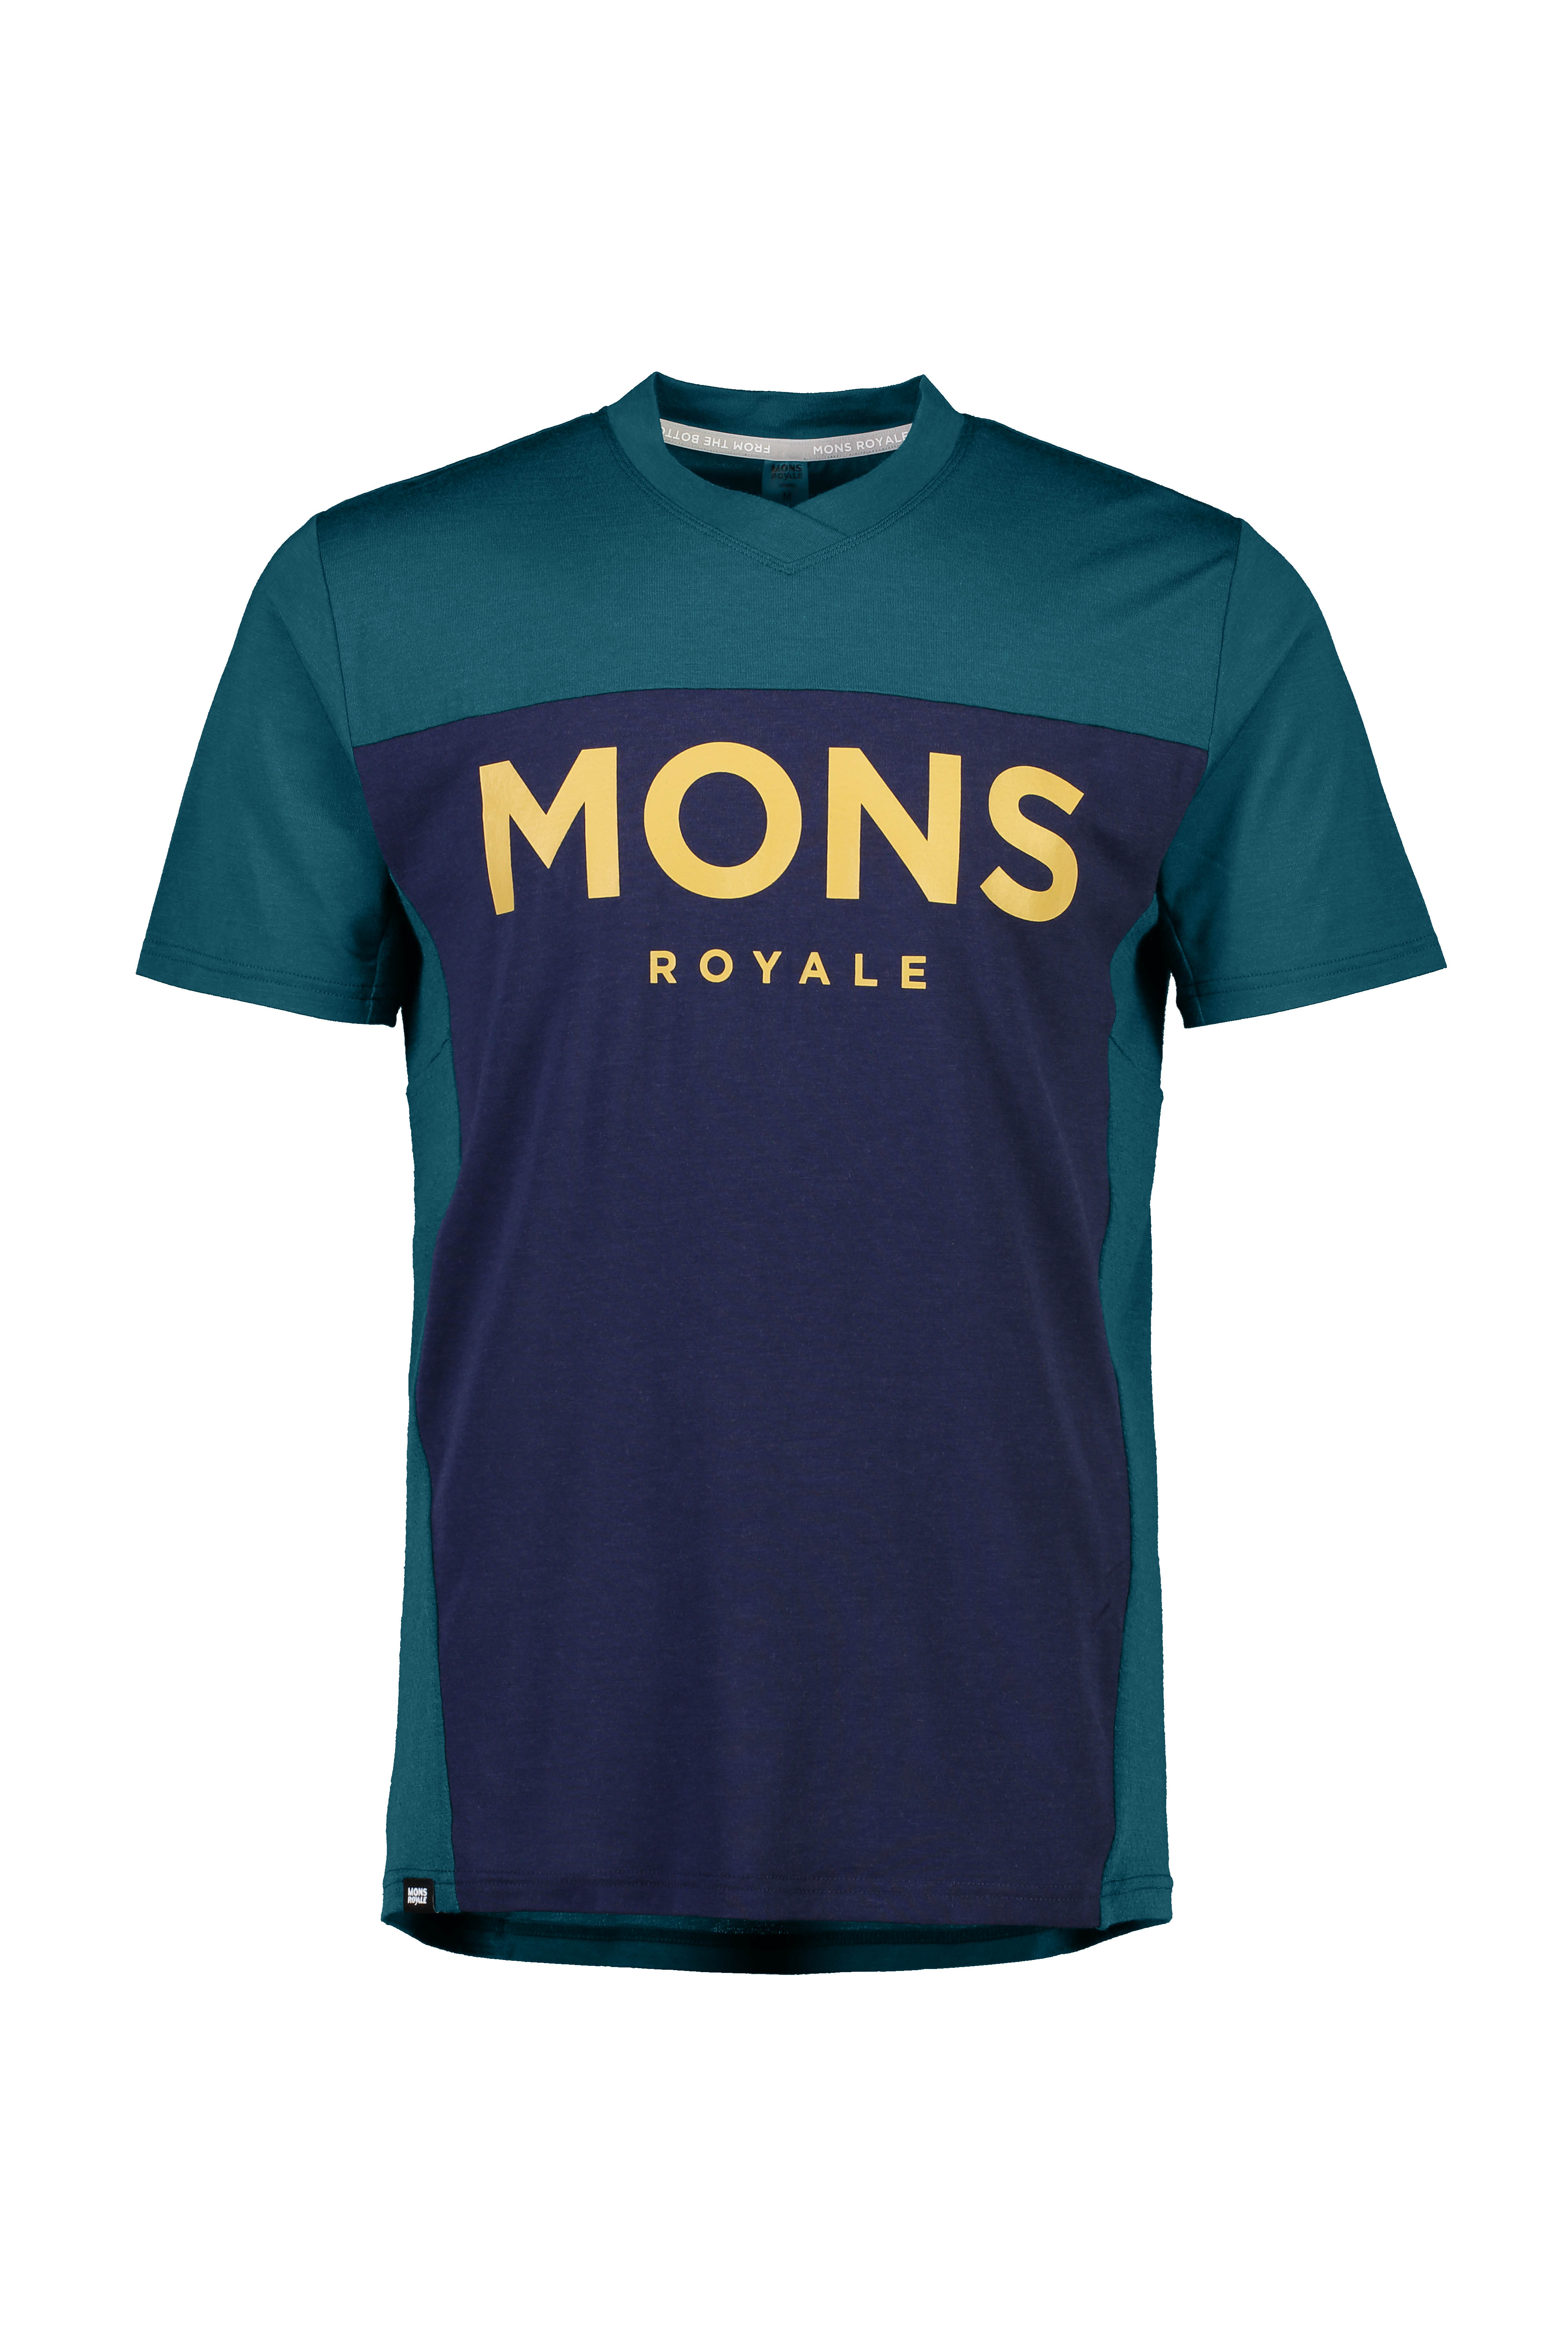 SS19 Mons Royale Redwood Enduro VT T-Shirt 